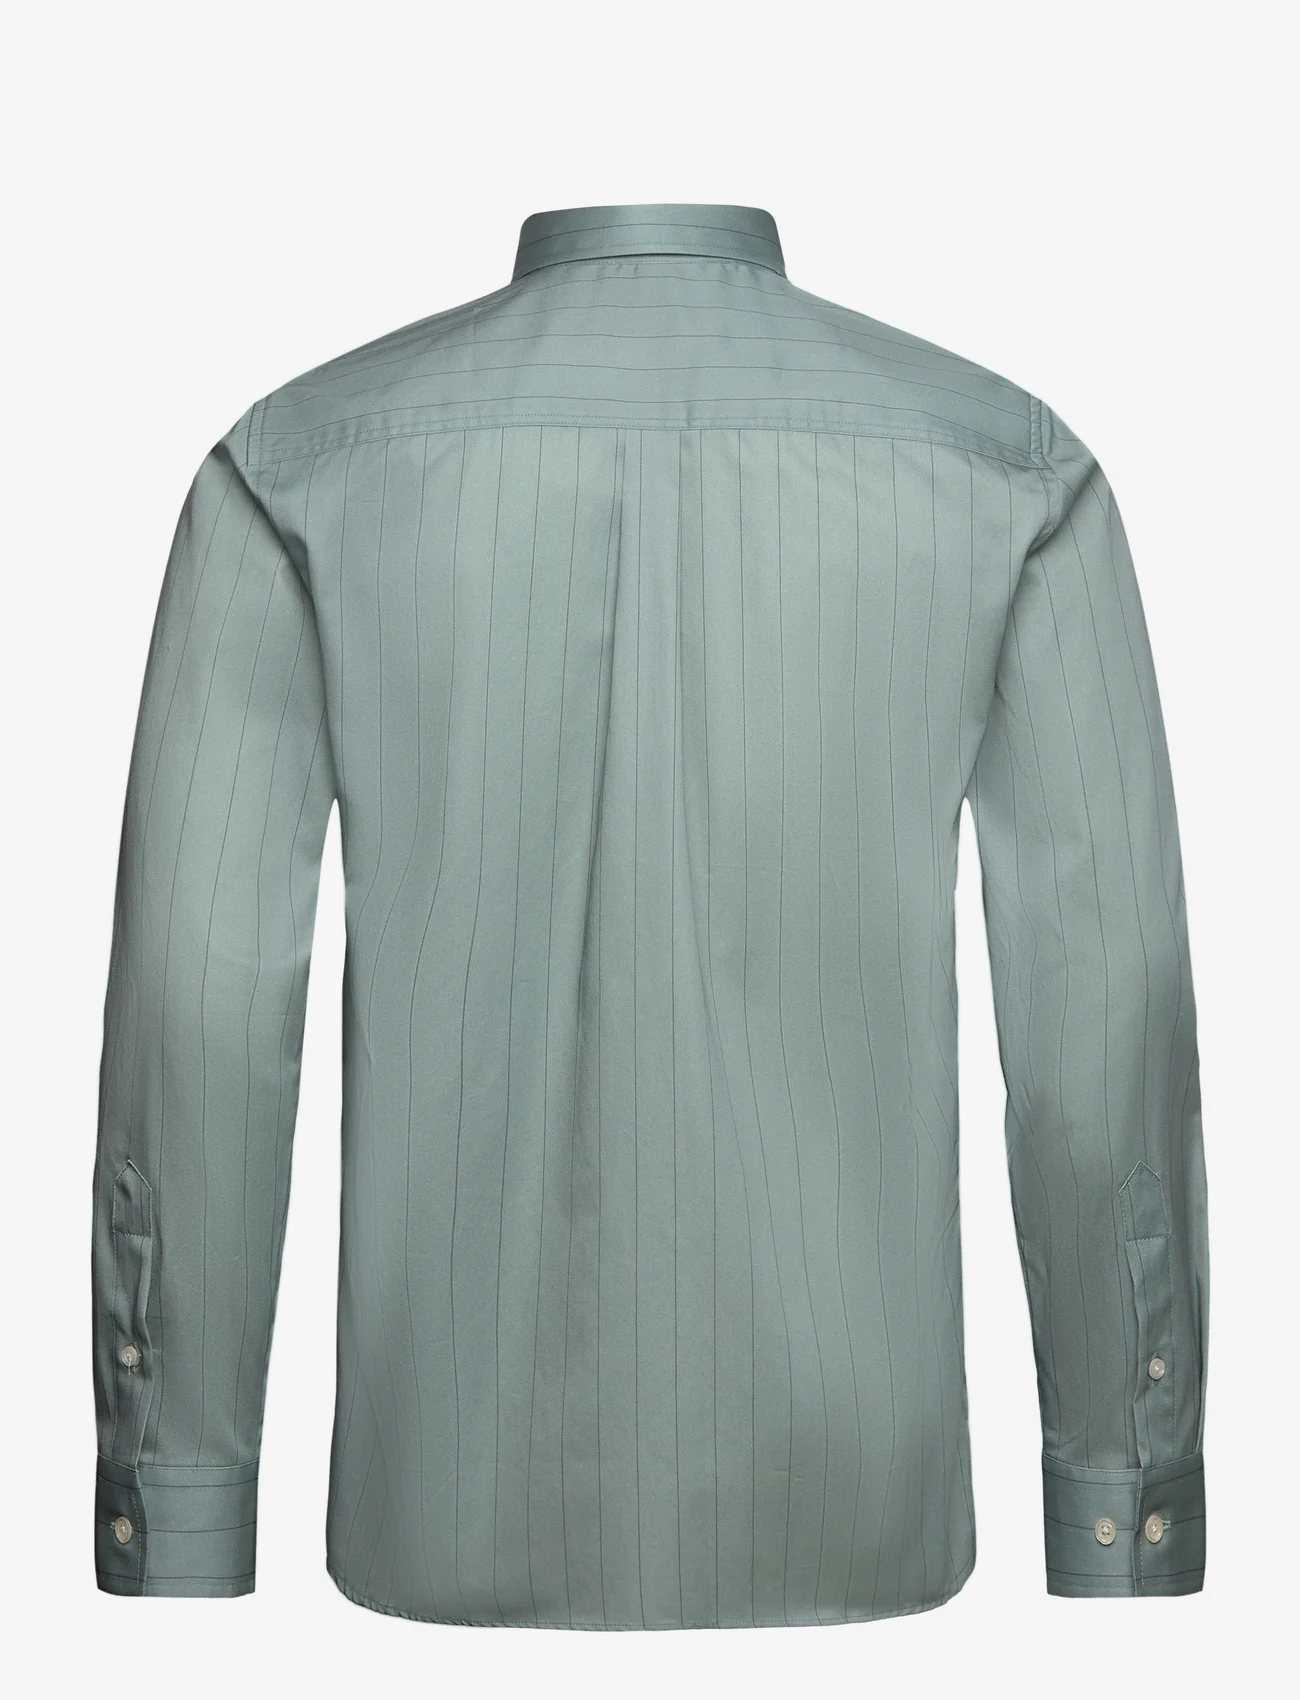 Bruuns Bazaar - SkyBBLorenzo shirt - kontorisärgid - sage stripe - 1